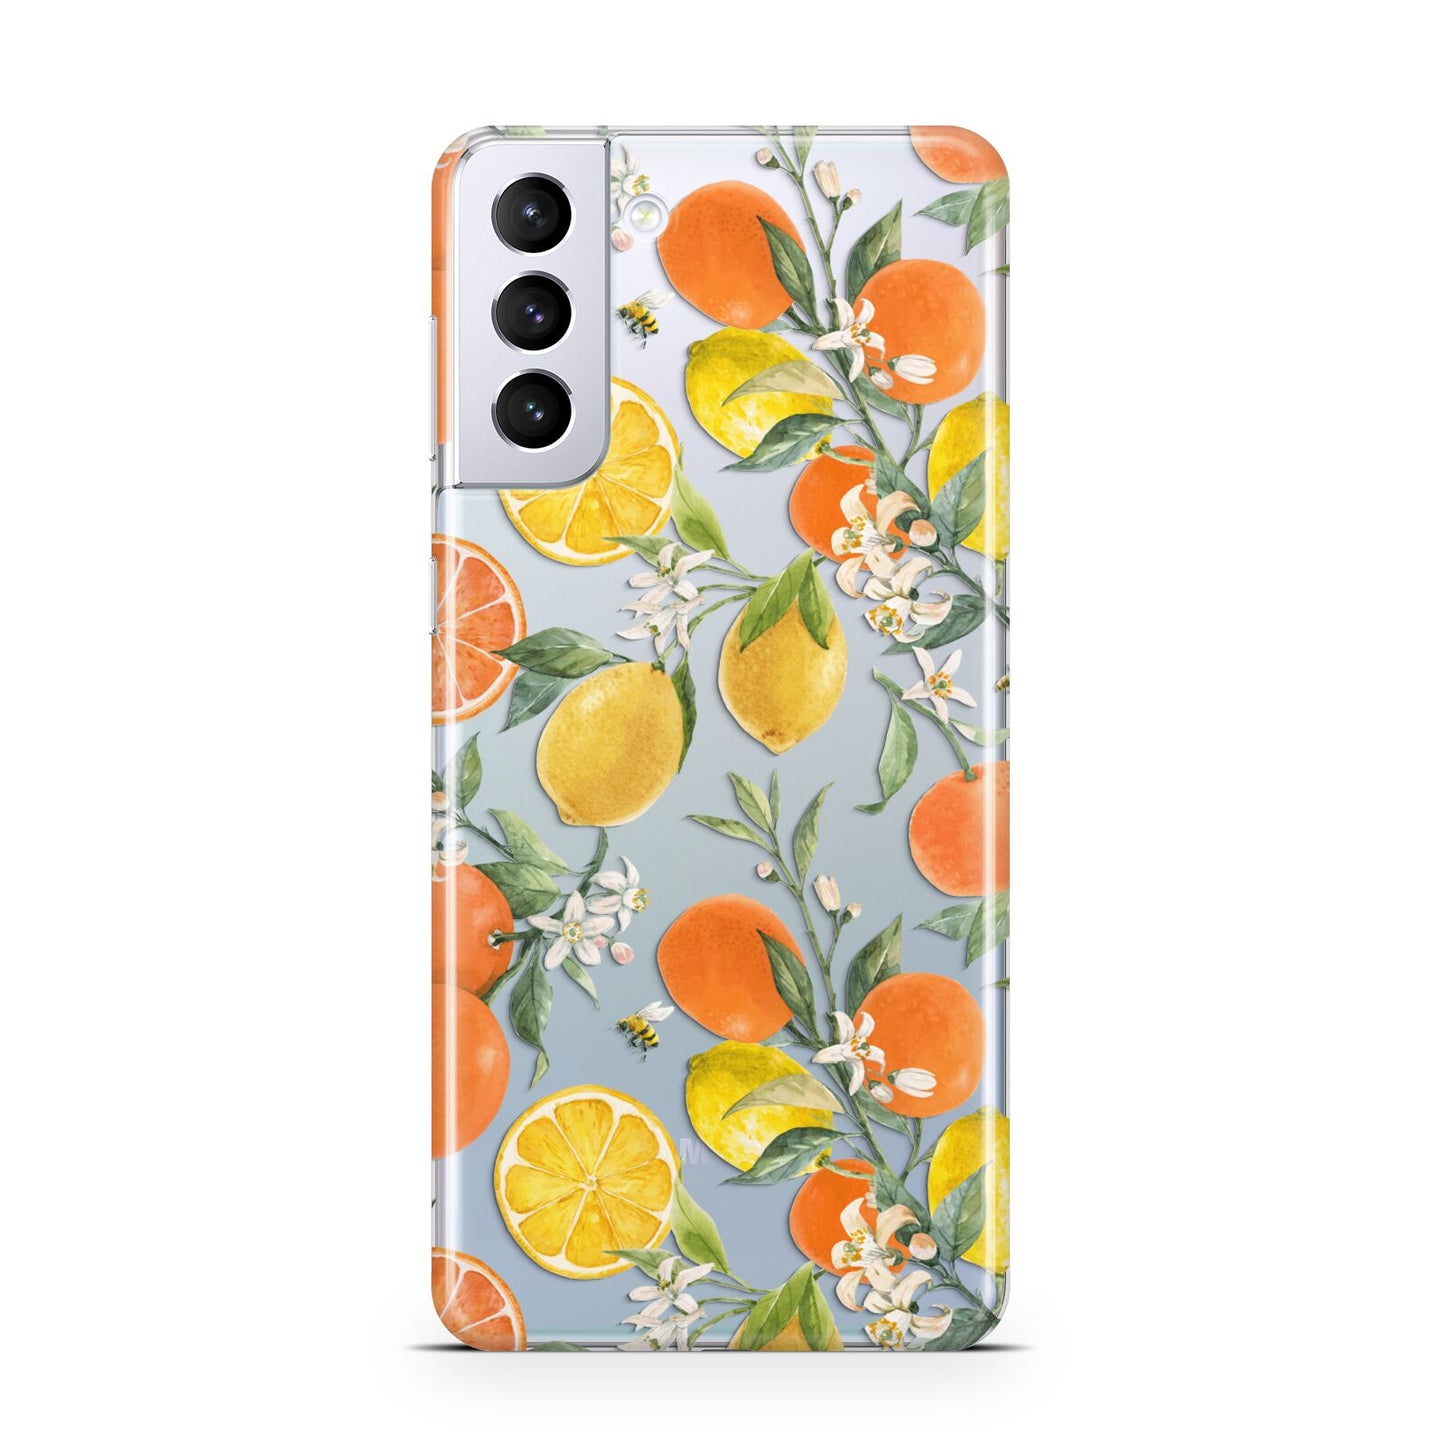 Lemons and Oranges Samsung S21 Plus Phone Case